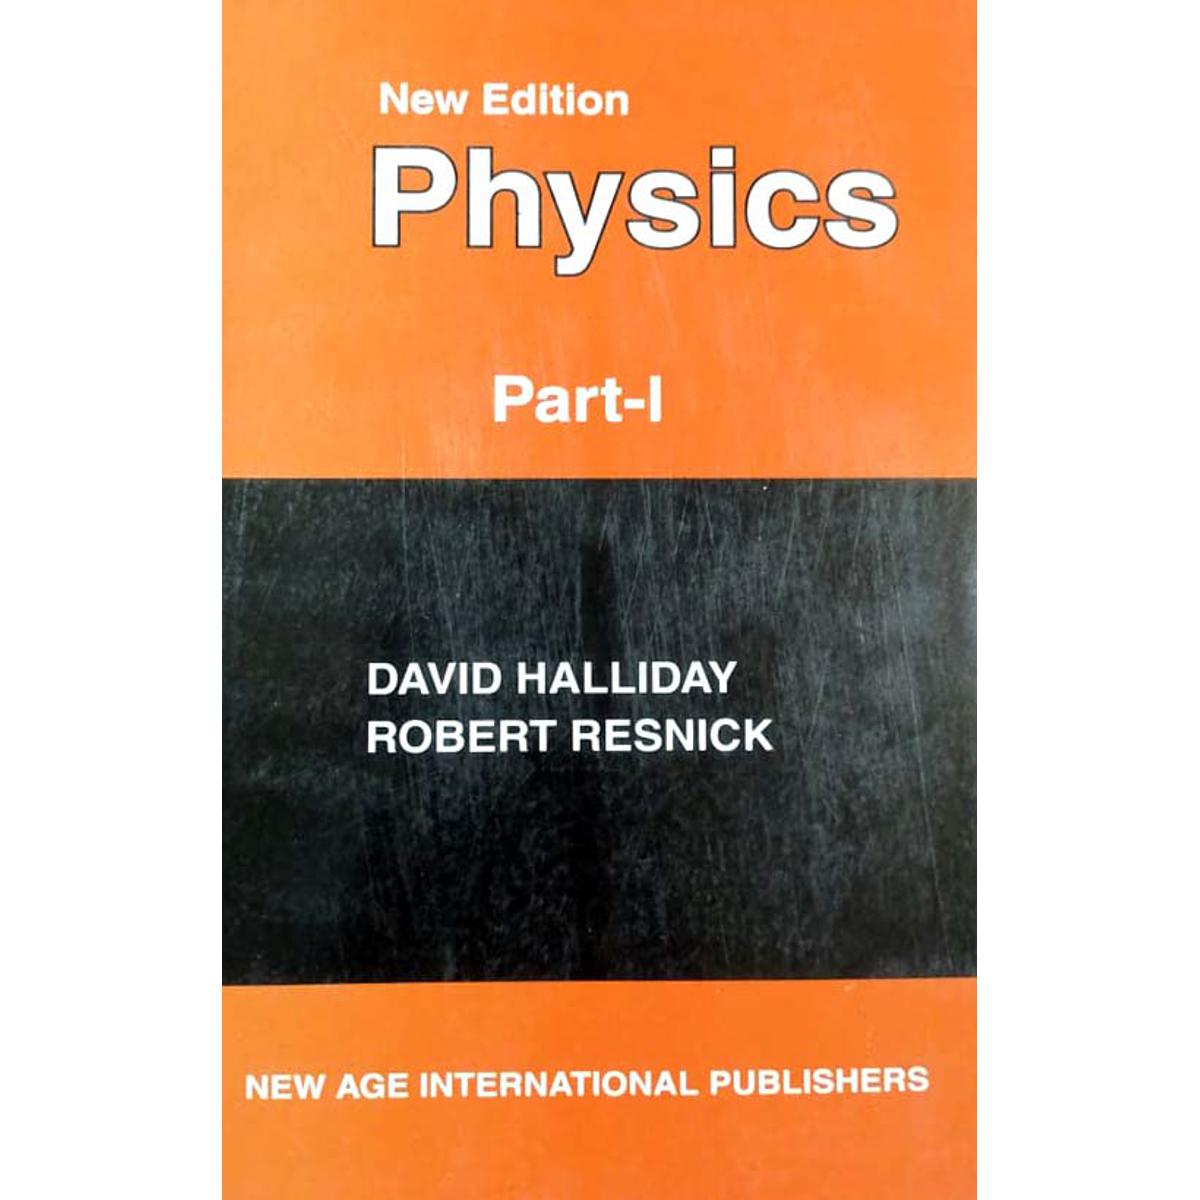 New Edition Physics Part-1